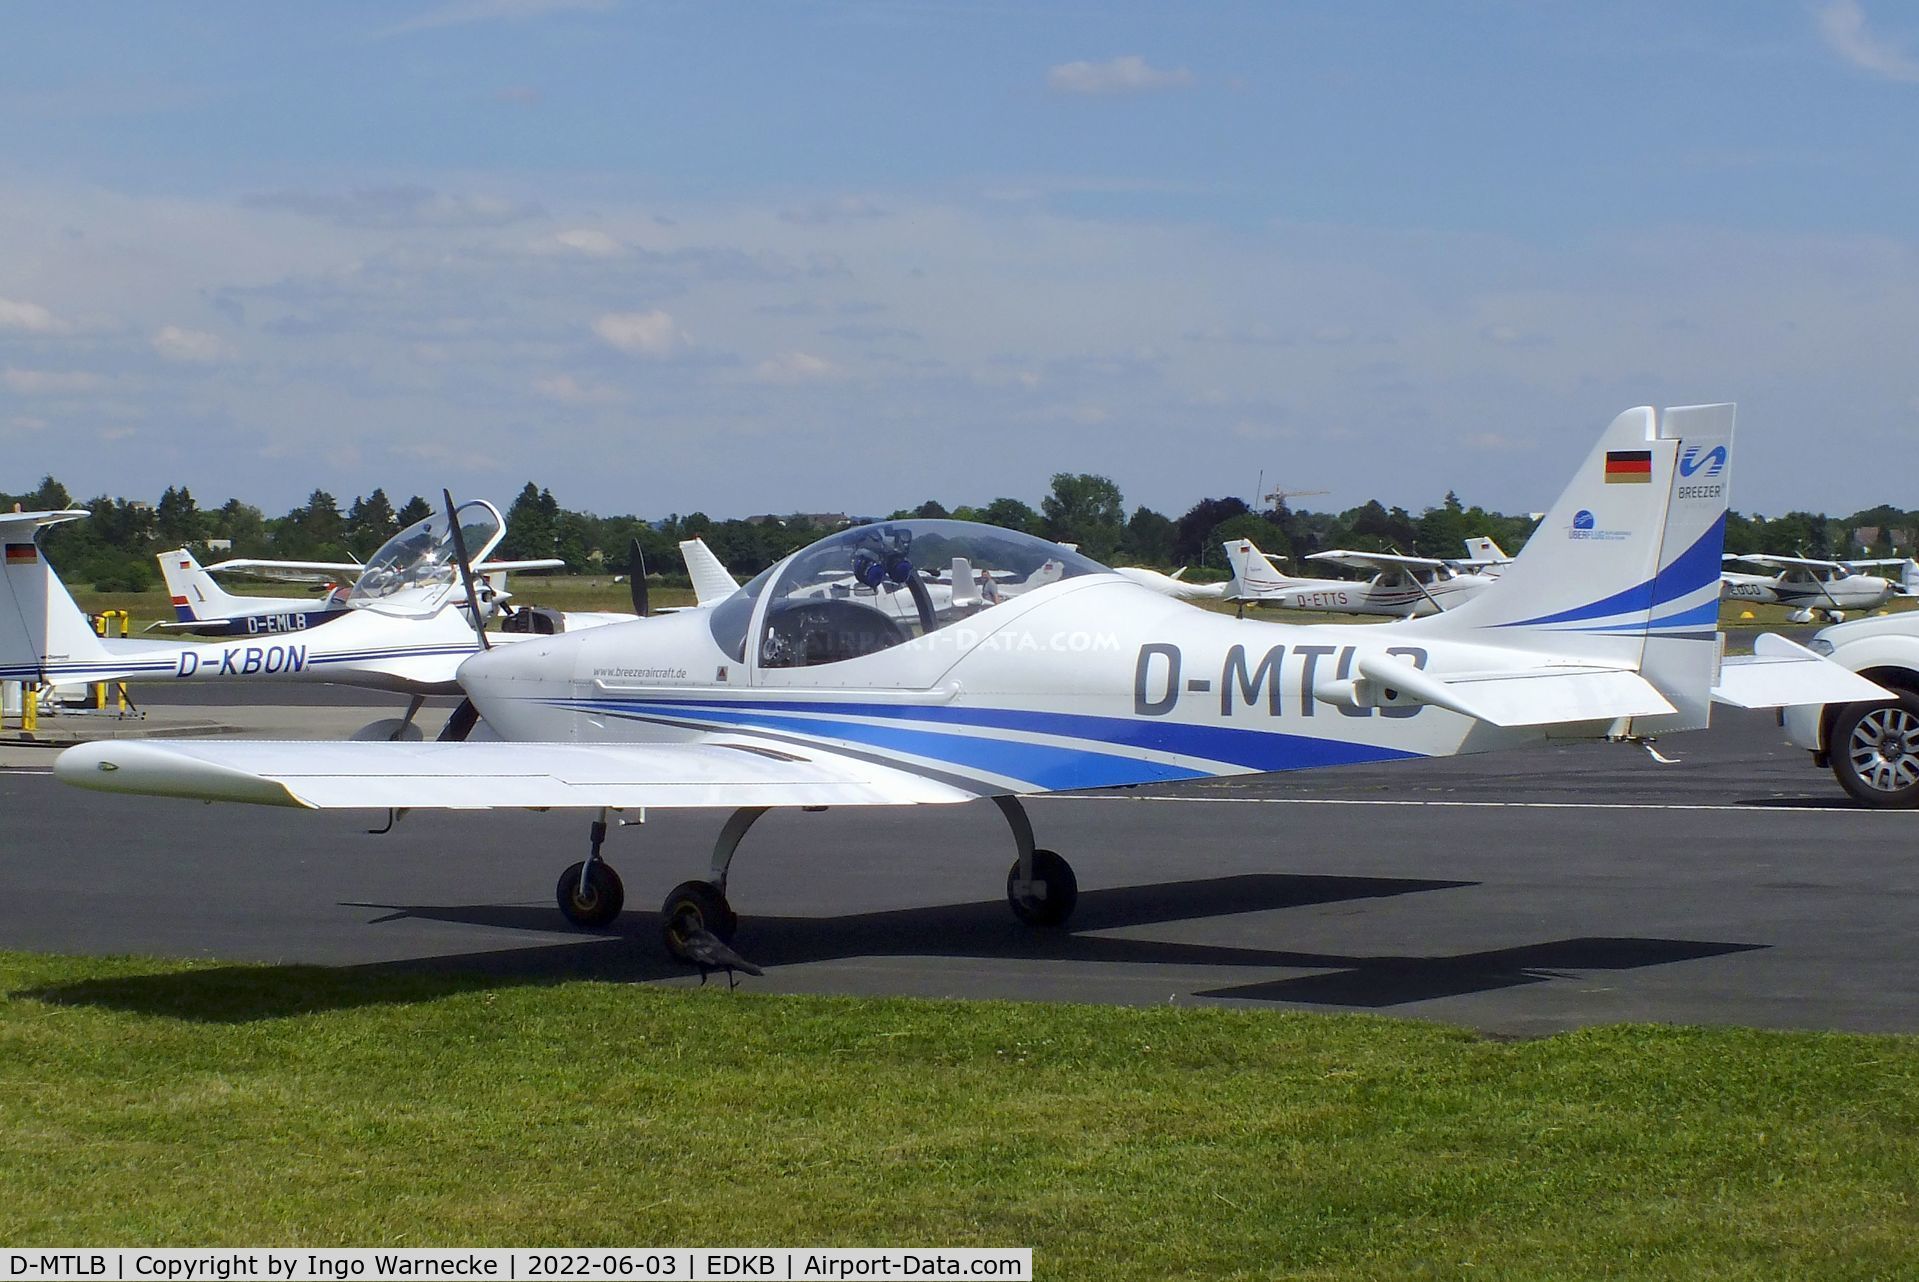 D-MTLB, Aerostyle Breezer B400 C/N Not found D-MTLB, Aerostyle Breezer B400 at Bonn-Hangelar airfield '2205-06